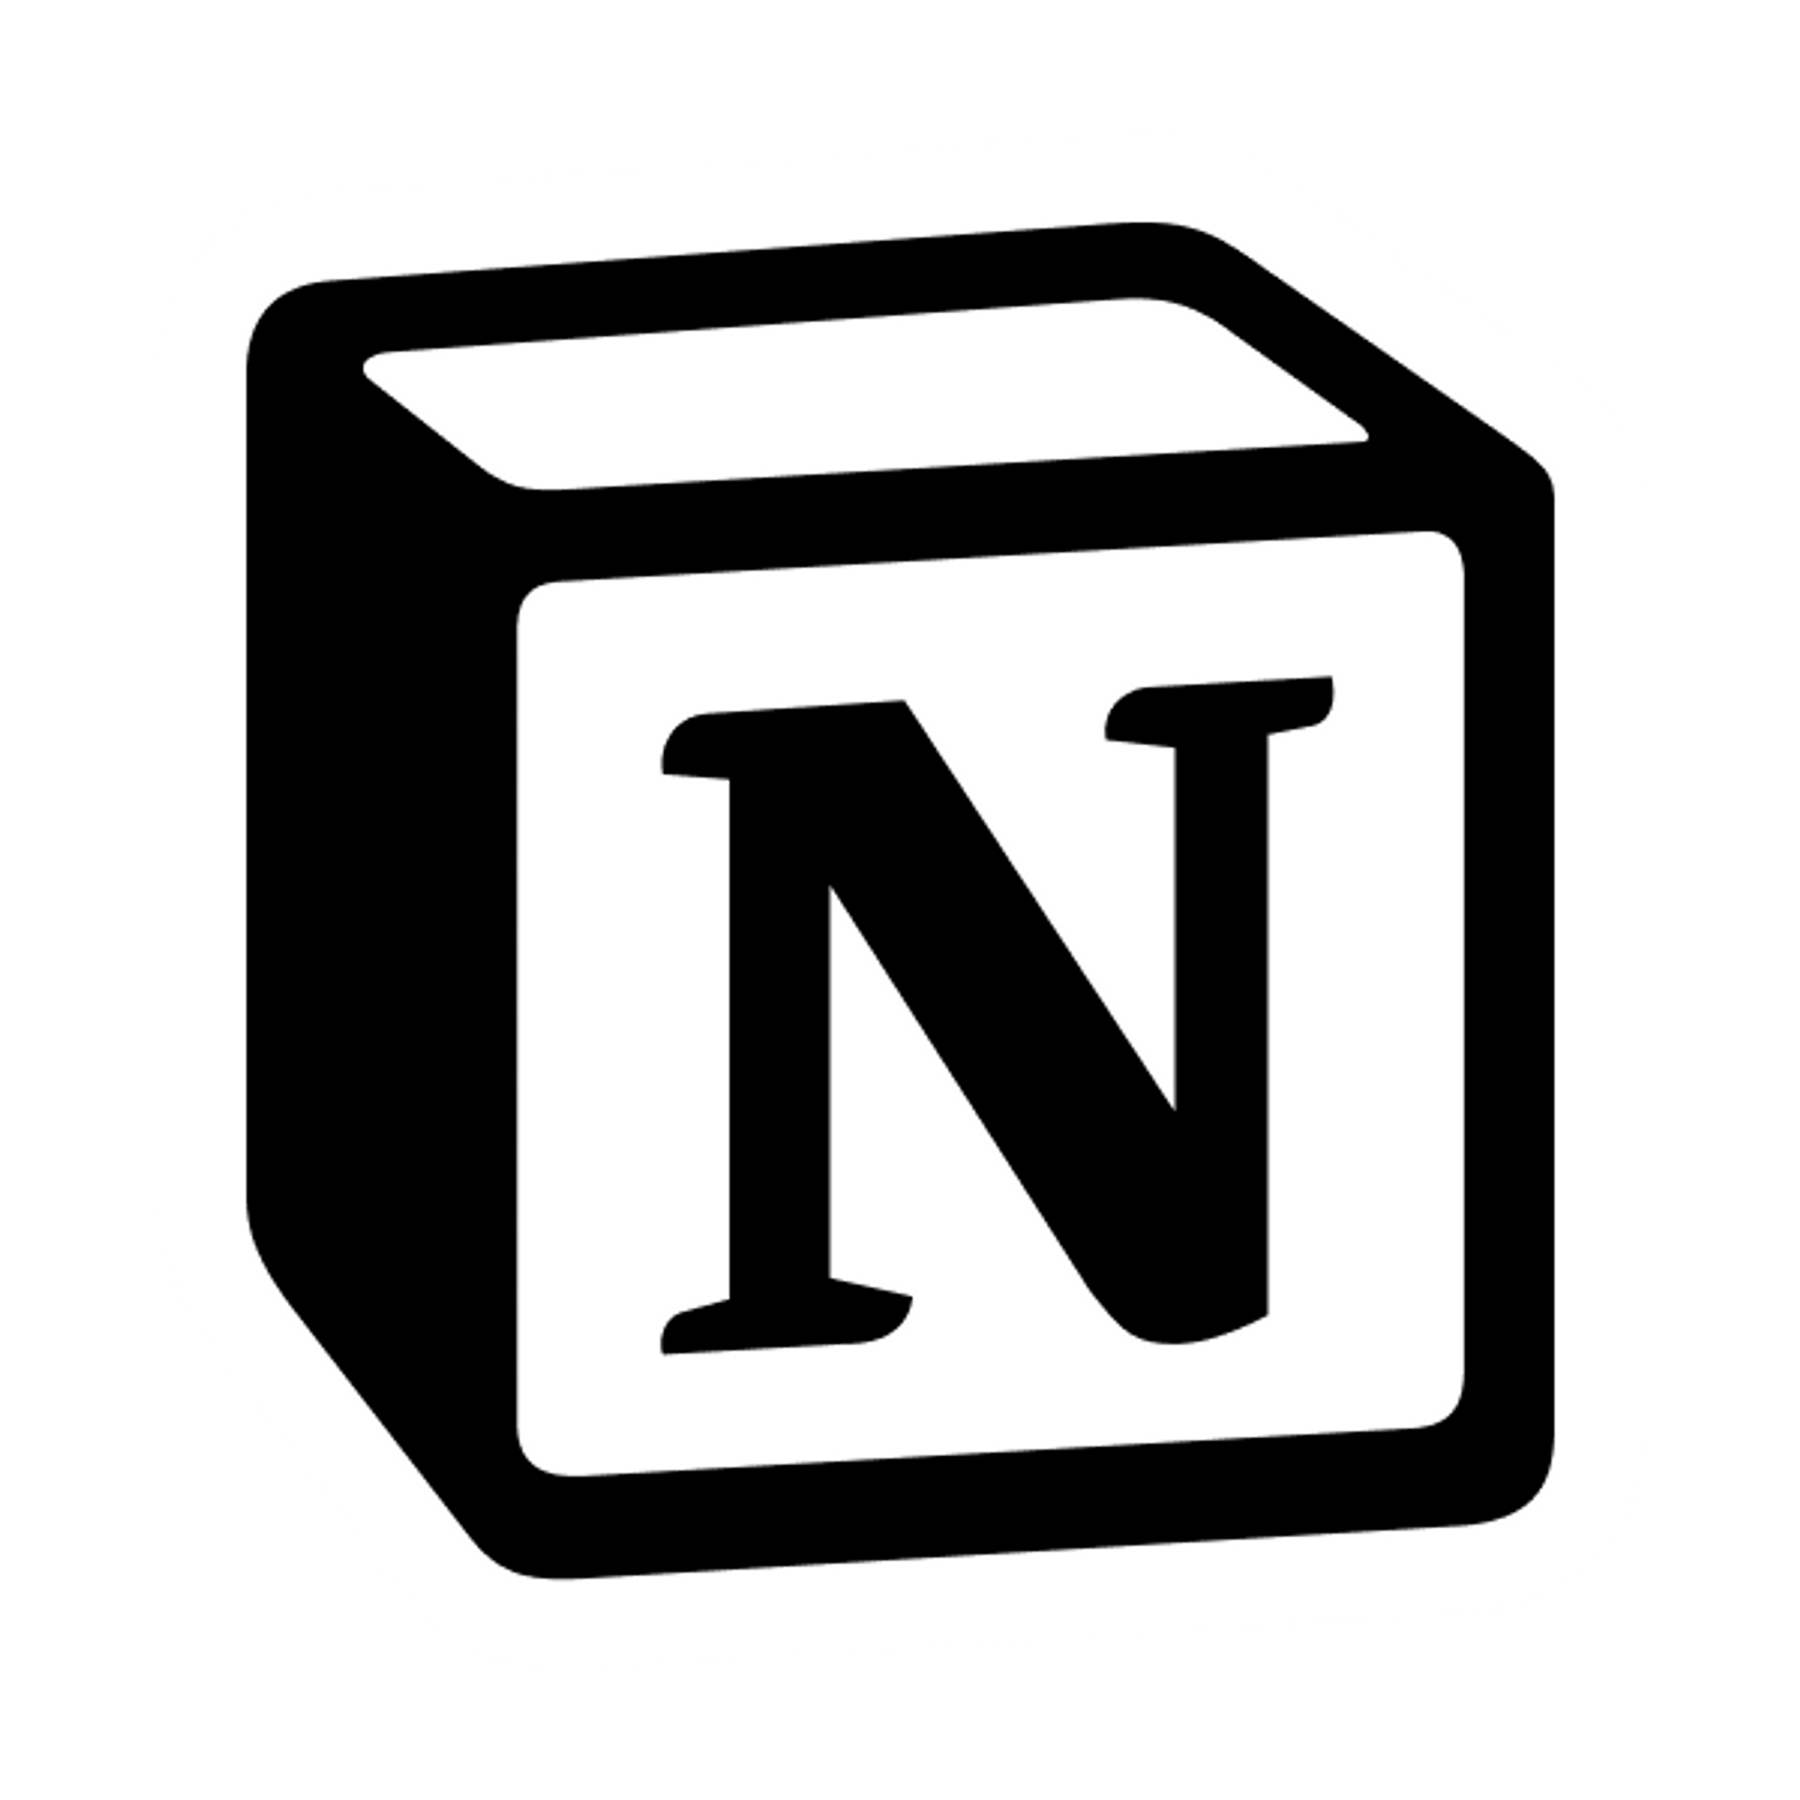 Notion Tokyo とは
Notionをもっと知りたい、活用したい人たちがあつまるコミュニティです。Slack でのチャットや、定期的なミートアップを実施しています。